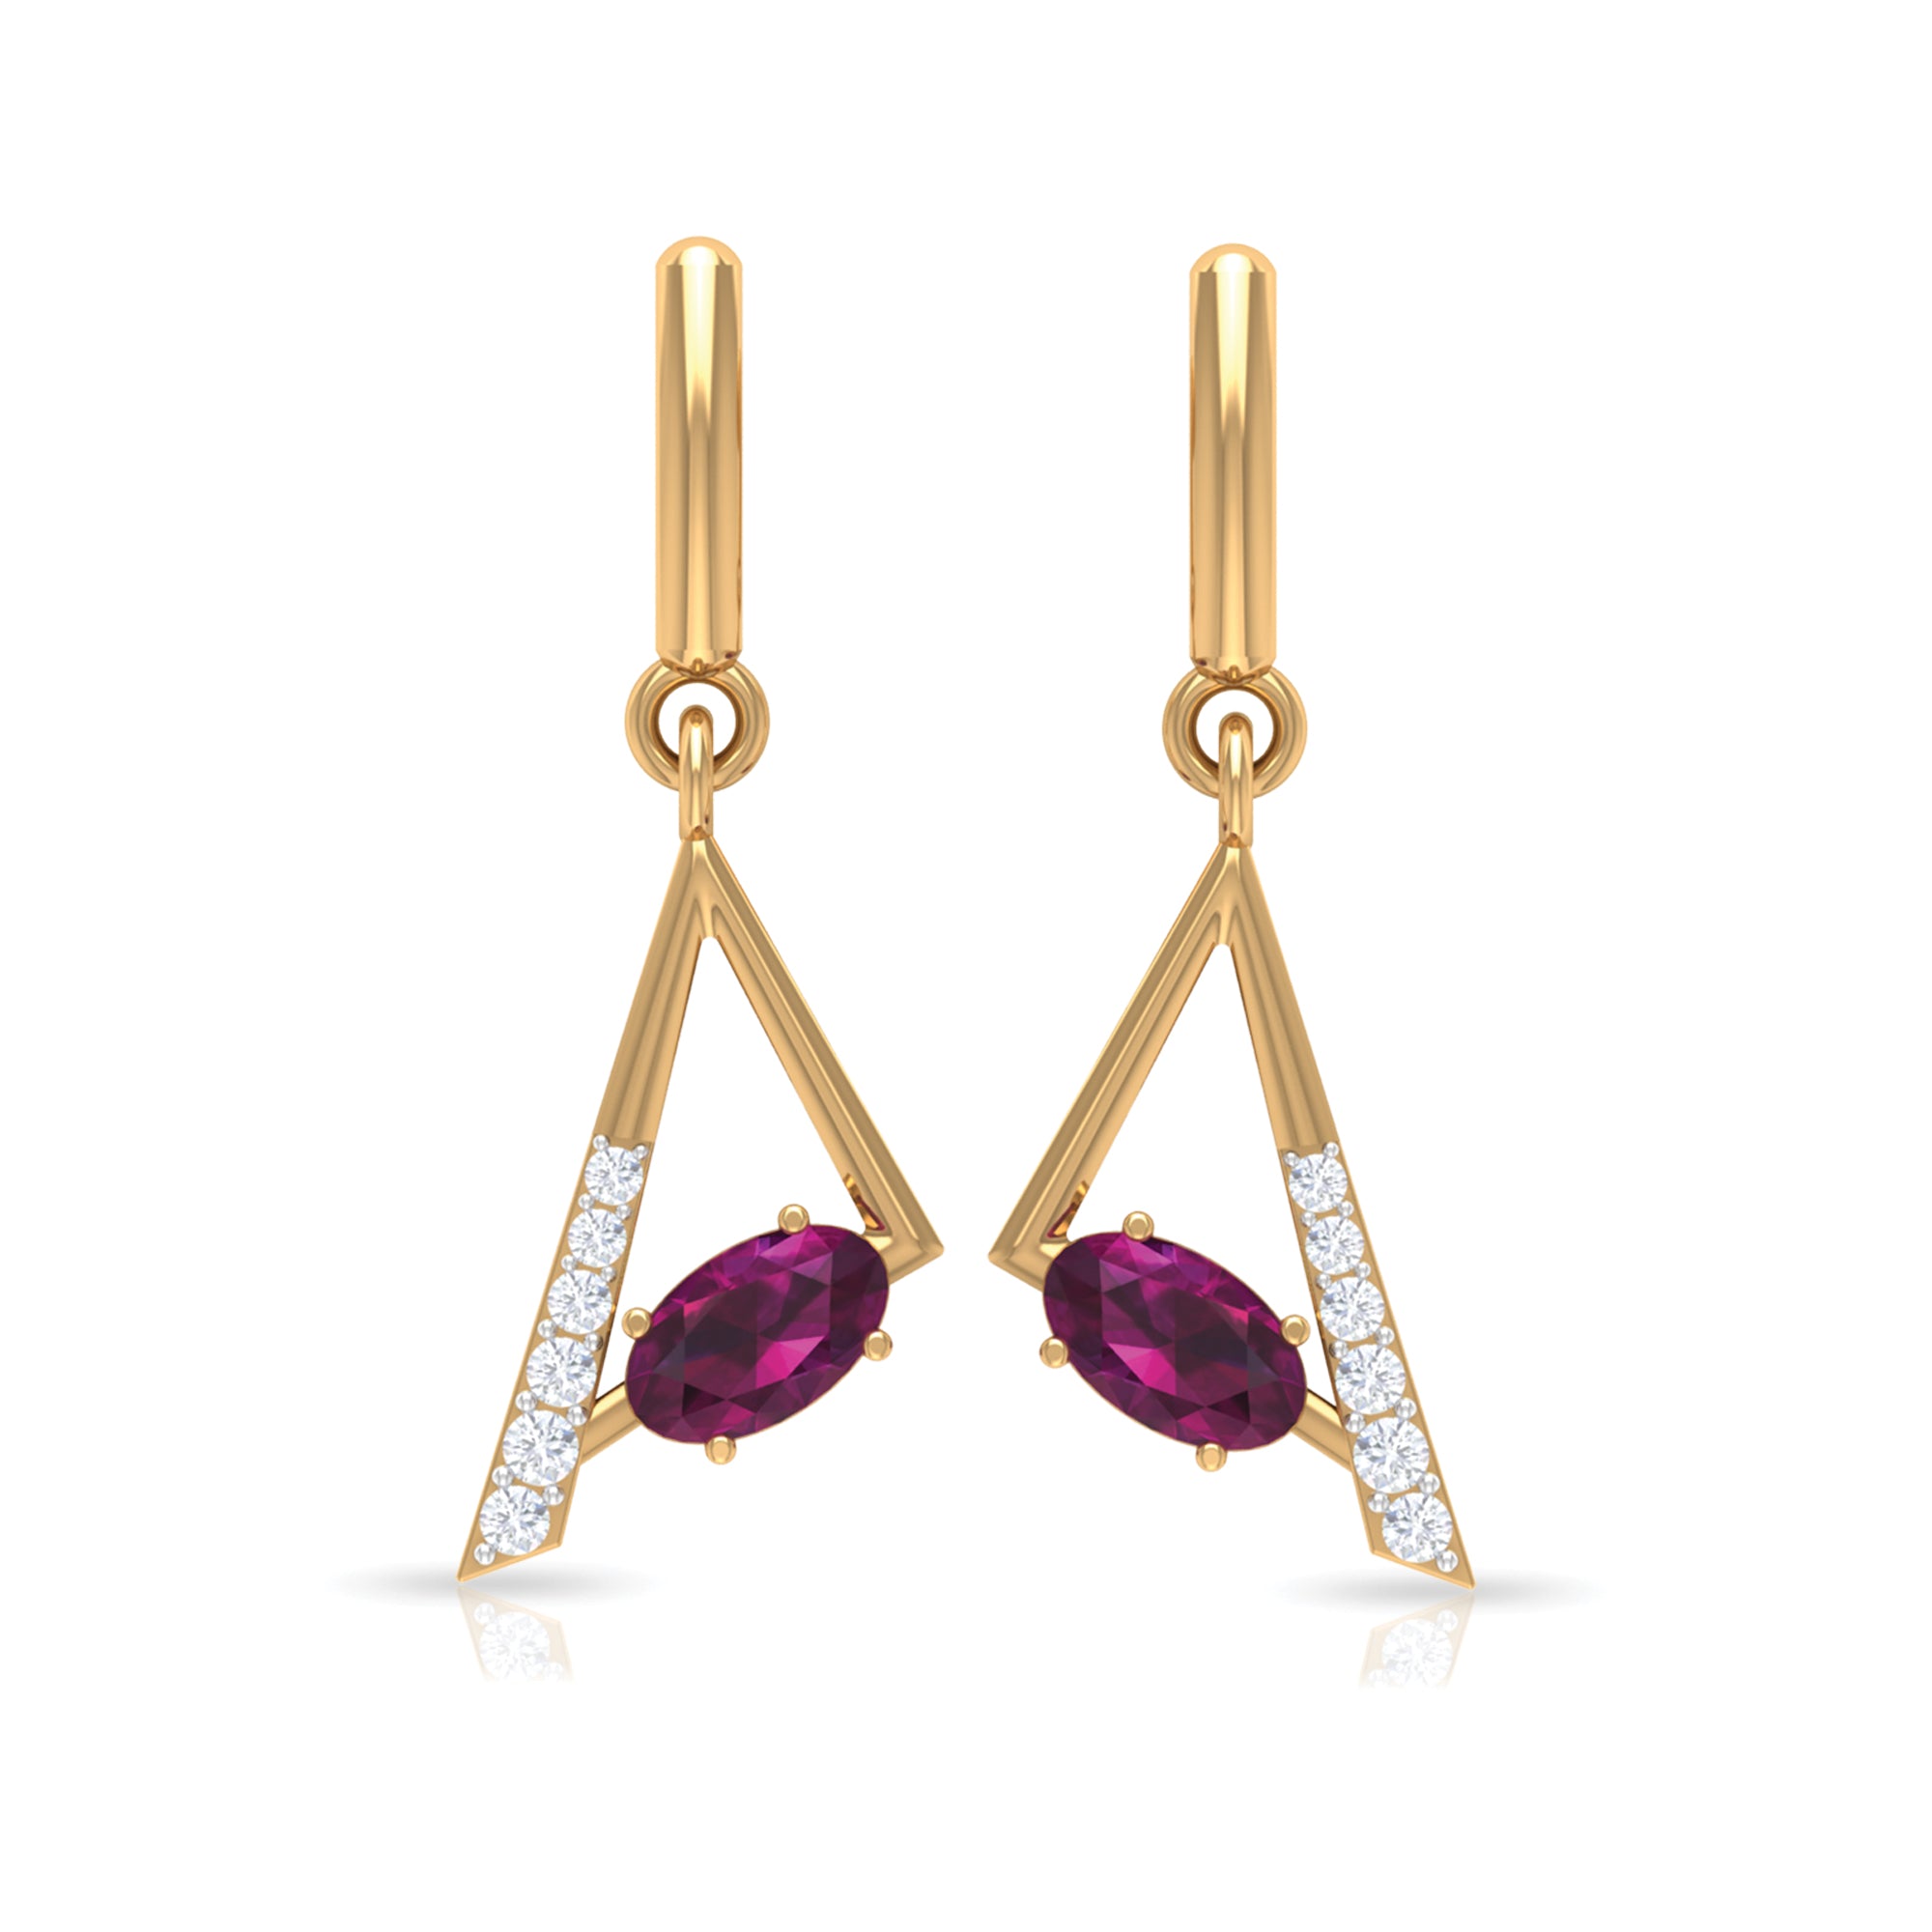 0.75 CT Rhodolite and Diamond Geometric Dangle Earrings Rhodolite - ( AAA ) - Quality - Rosec Jewels